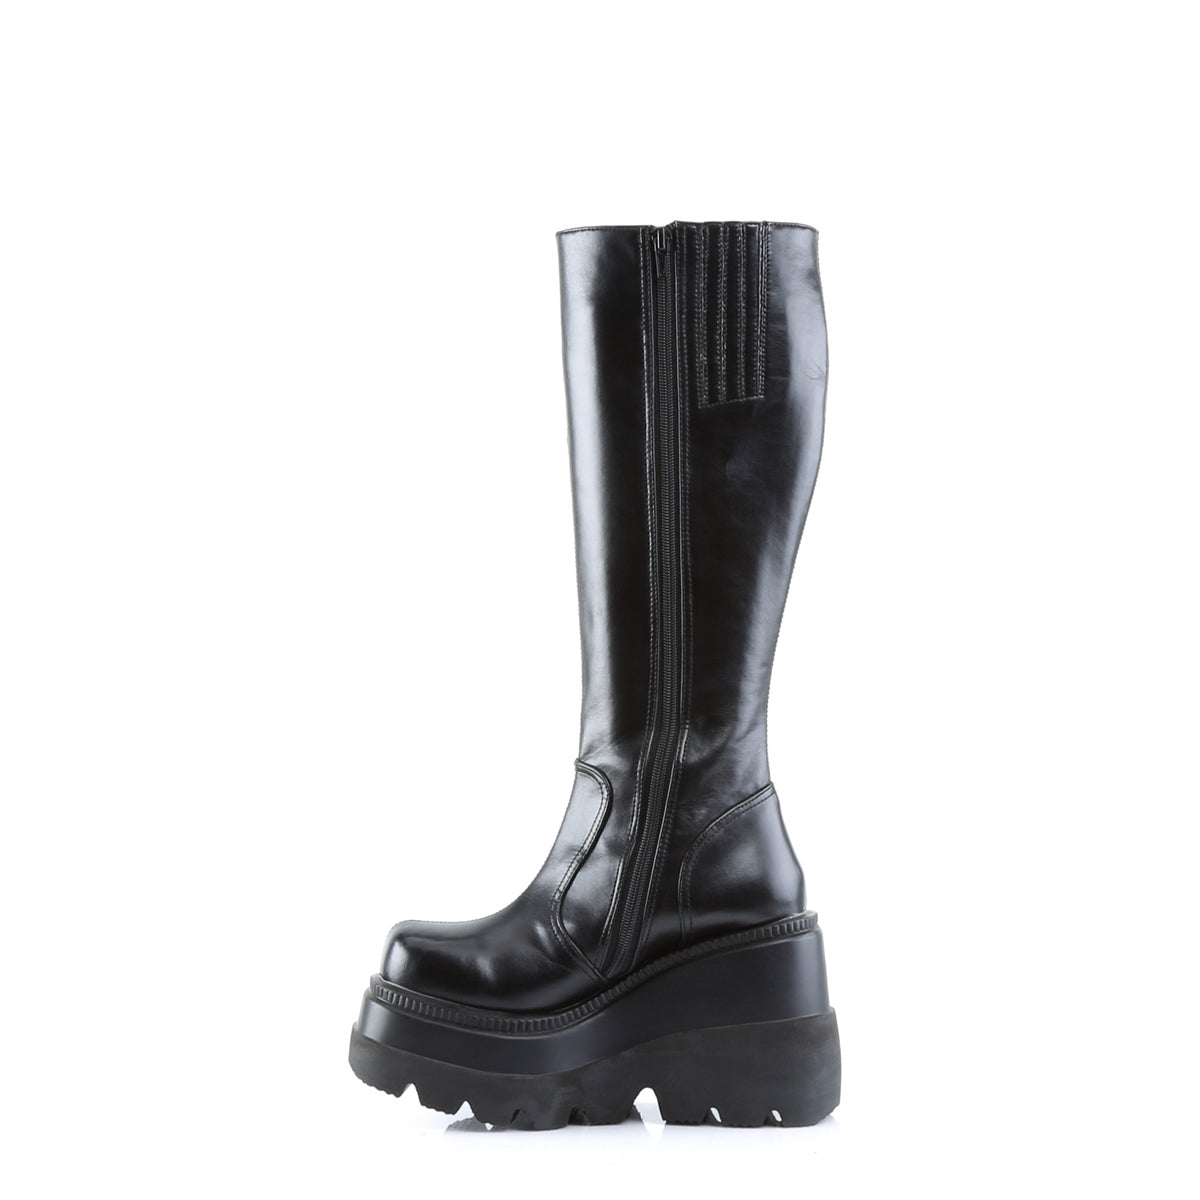 SHAKER-100 Demonia Black Vegan Leather Women's Mid-Calf & Knee High Boots [Demonia Cult Alternative Footwear]